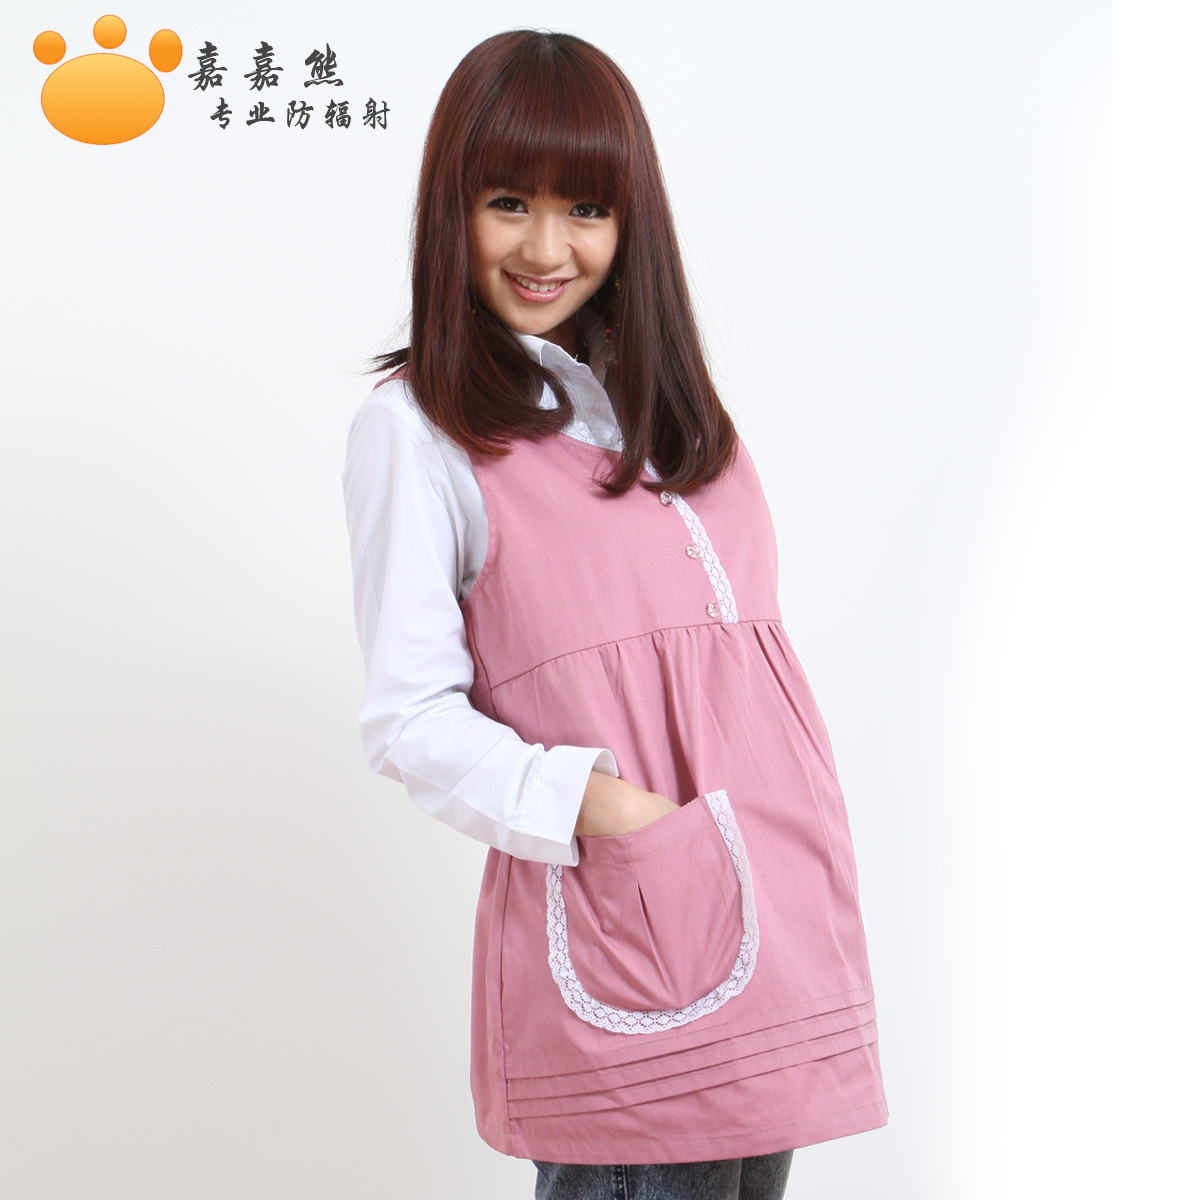 Jiajia radiation-resistant maternity clothing maternity radiation-resistant aj-1028 set